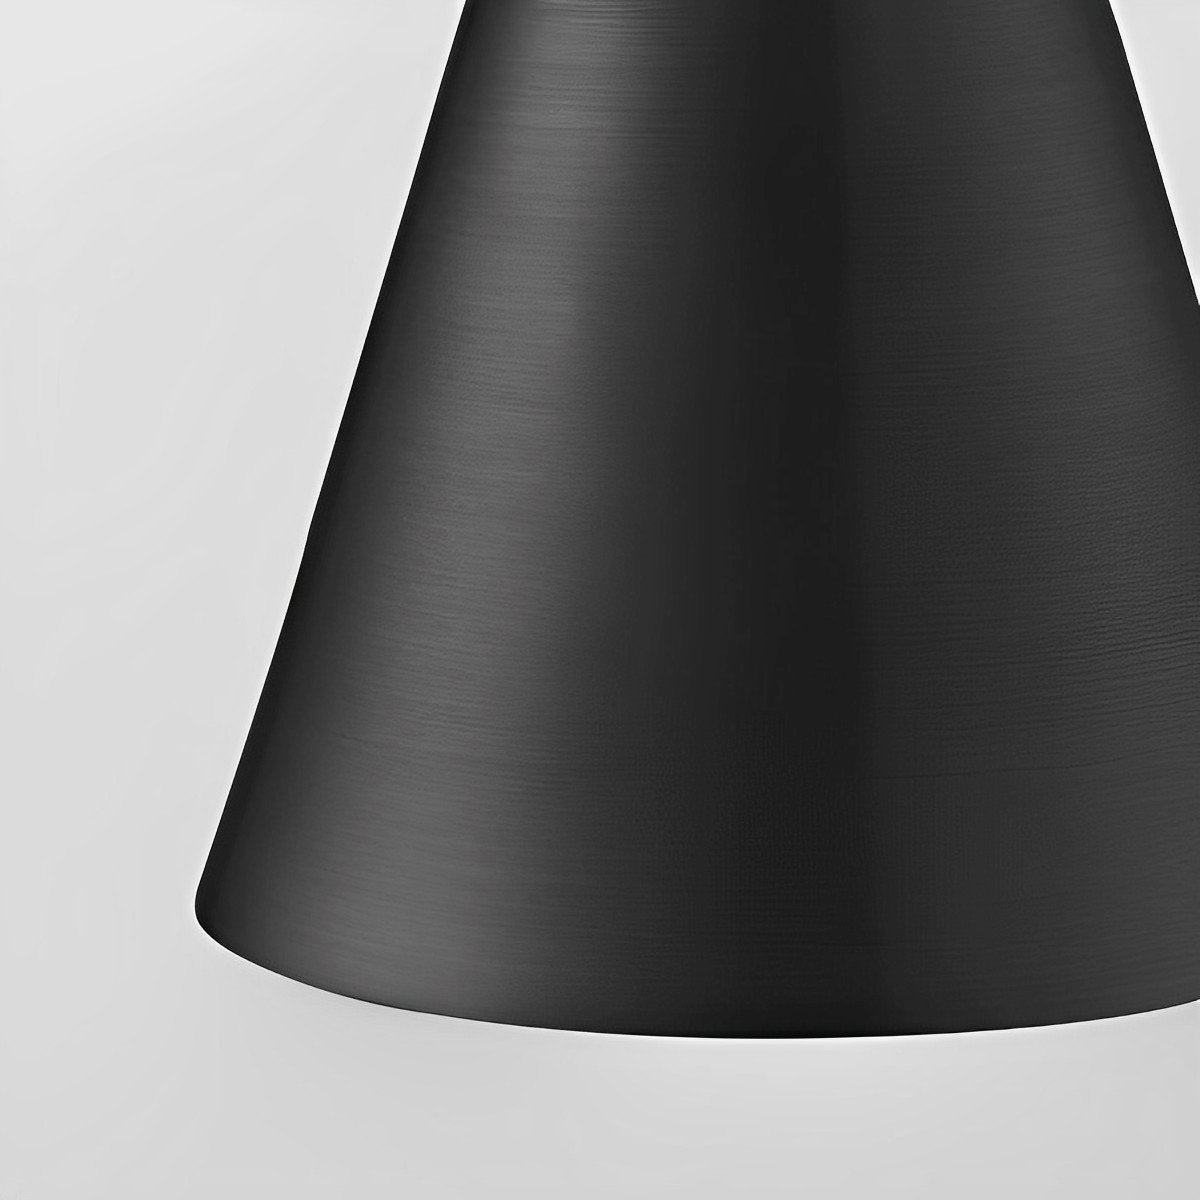 Adjustable Black Color Hanging Drop Light For Home Décor - Flyachilles